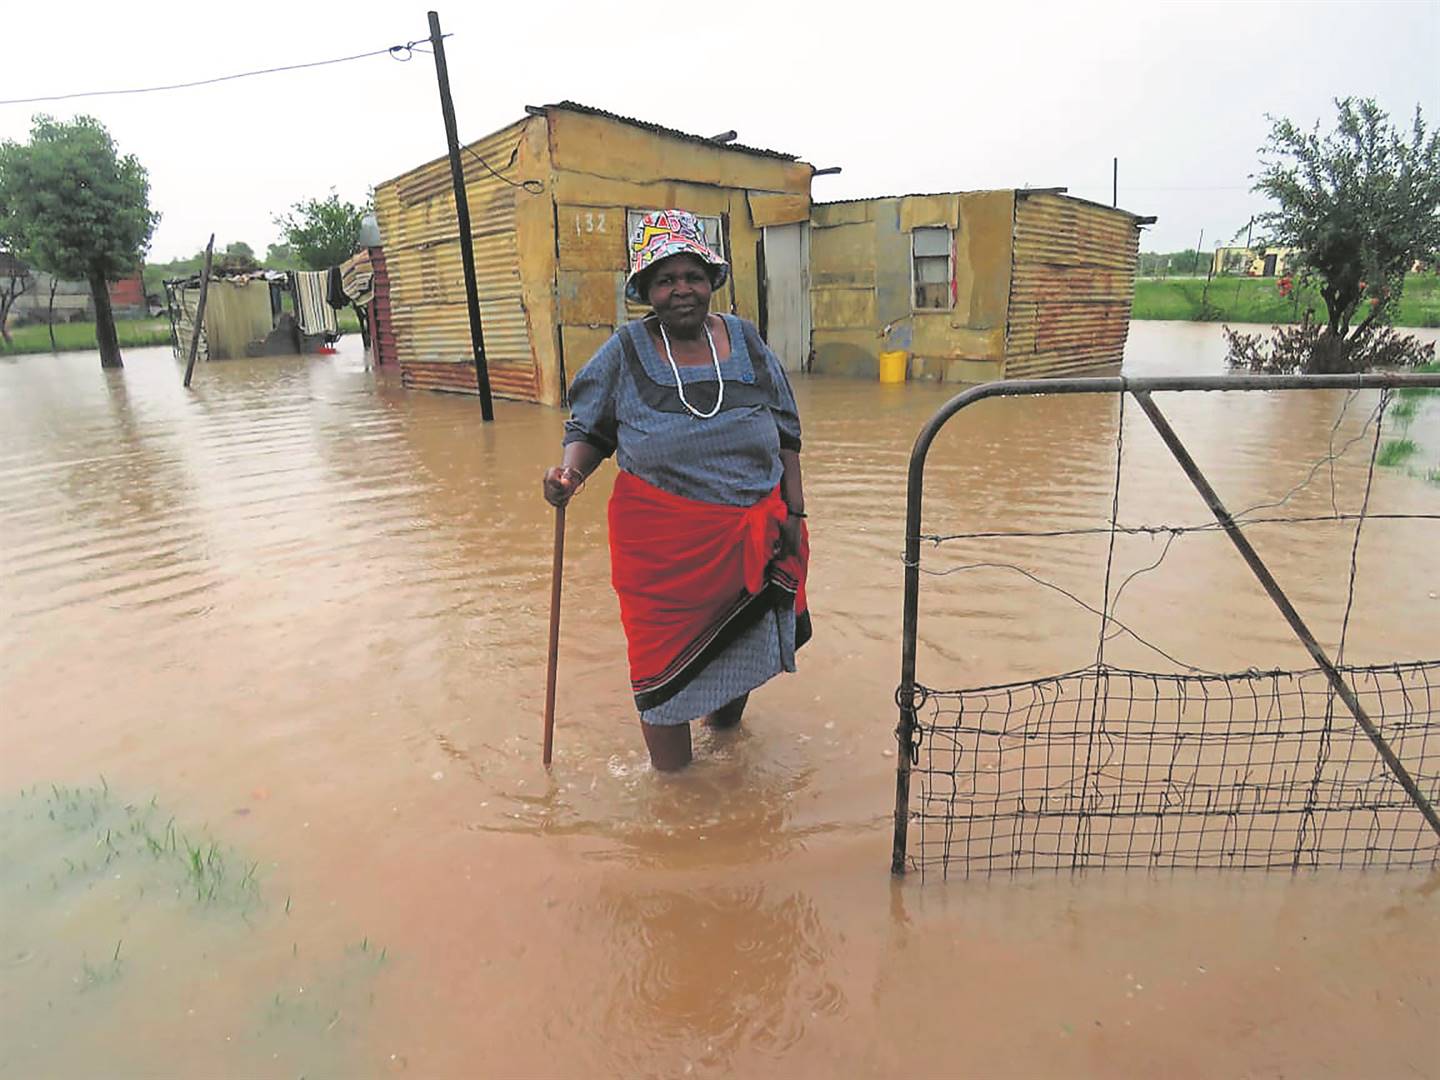 Gogo Josephine Malatjie’s shack in Hammanskraal was flooded with water after heavy rain. Photo by Raymond Morare